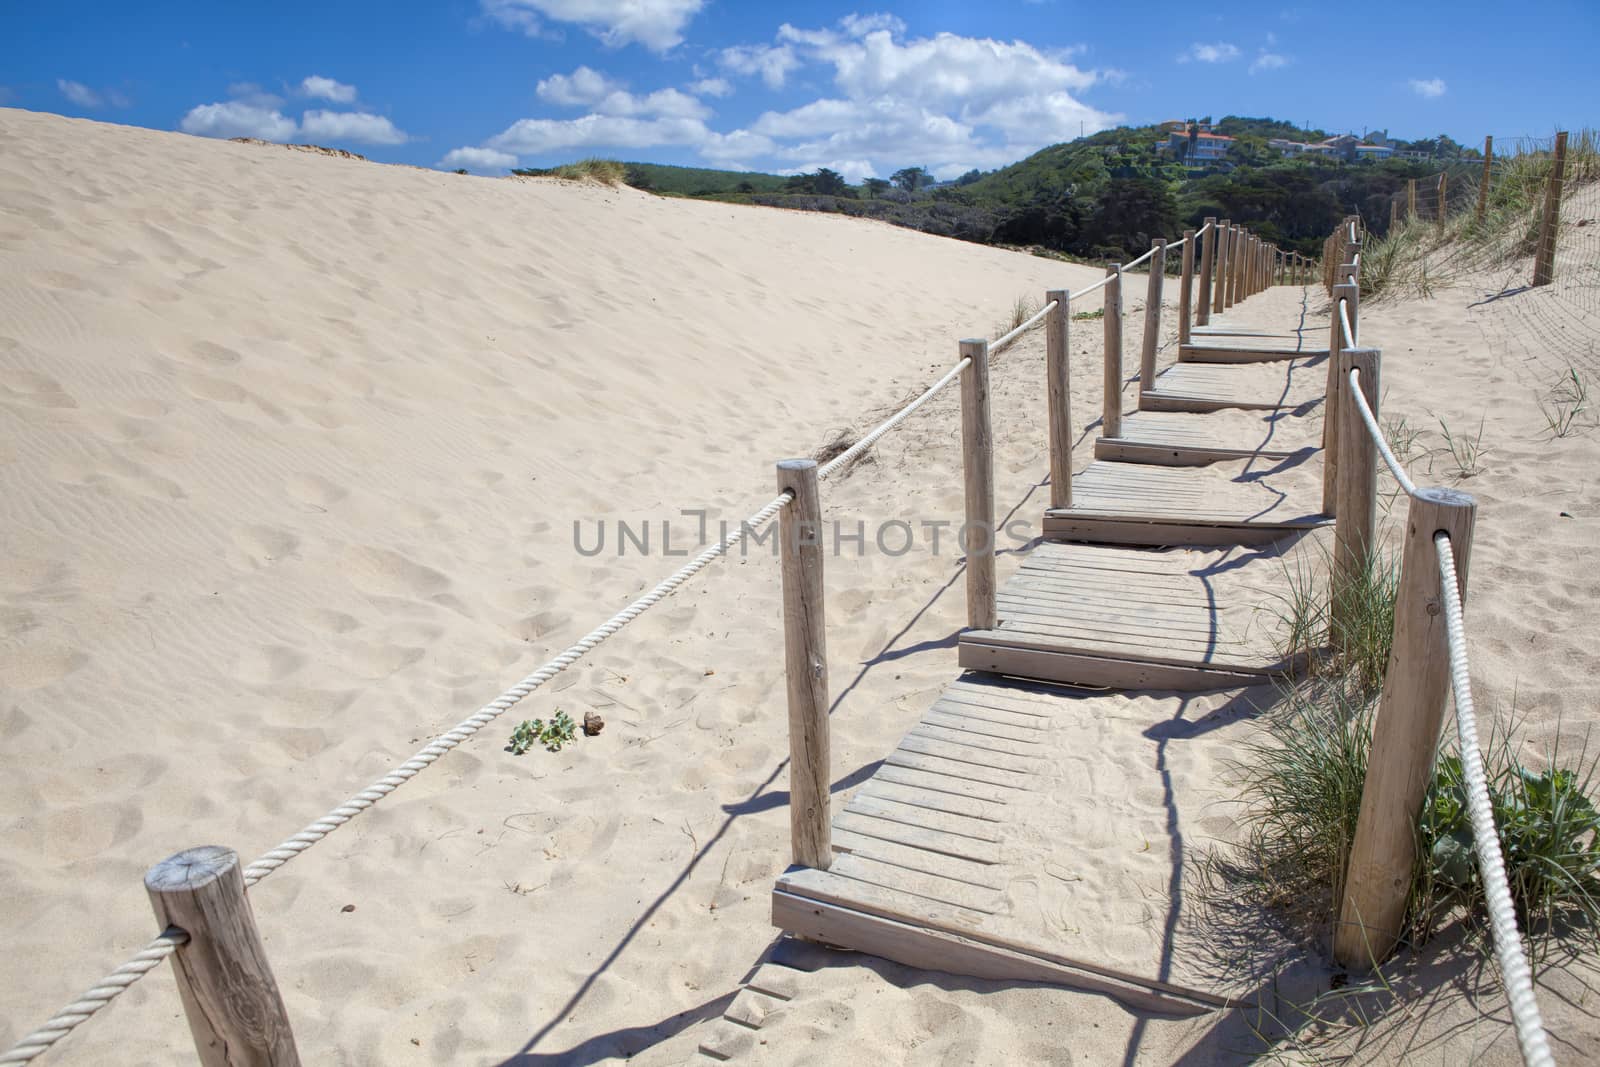 Wooden board path way to the sandy beach by kalnenko